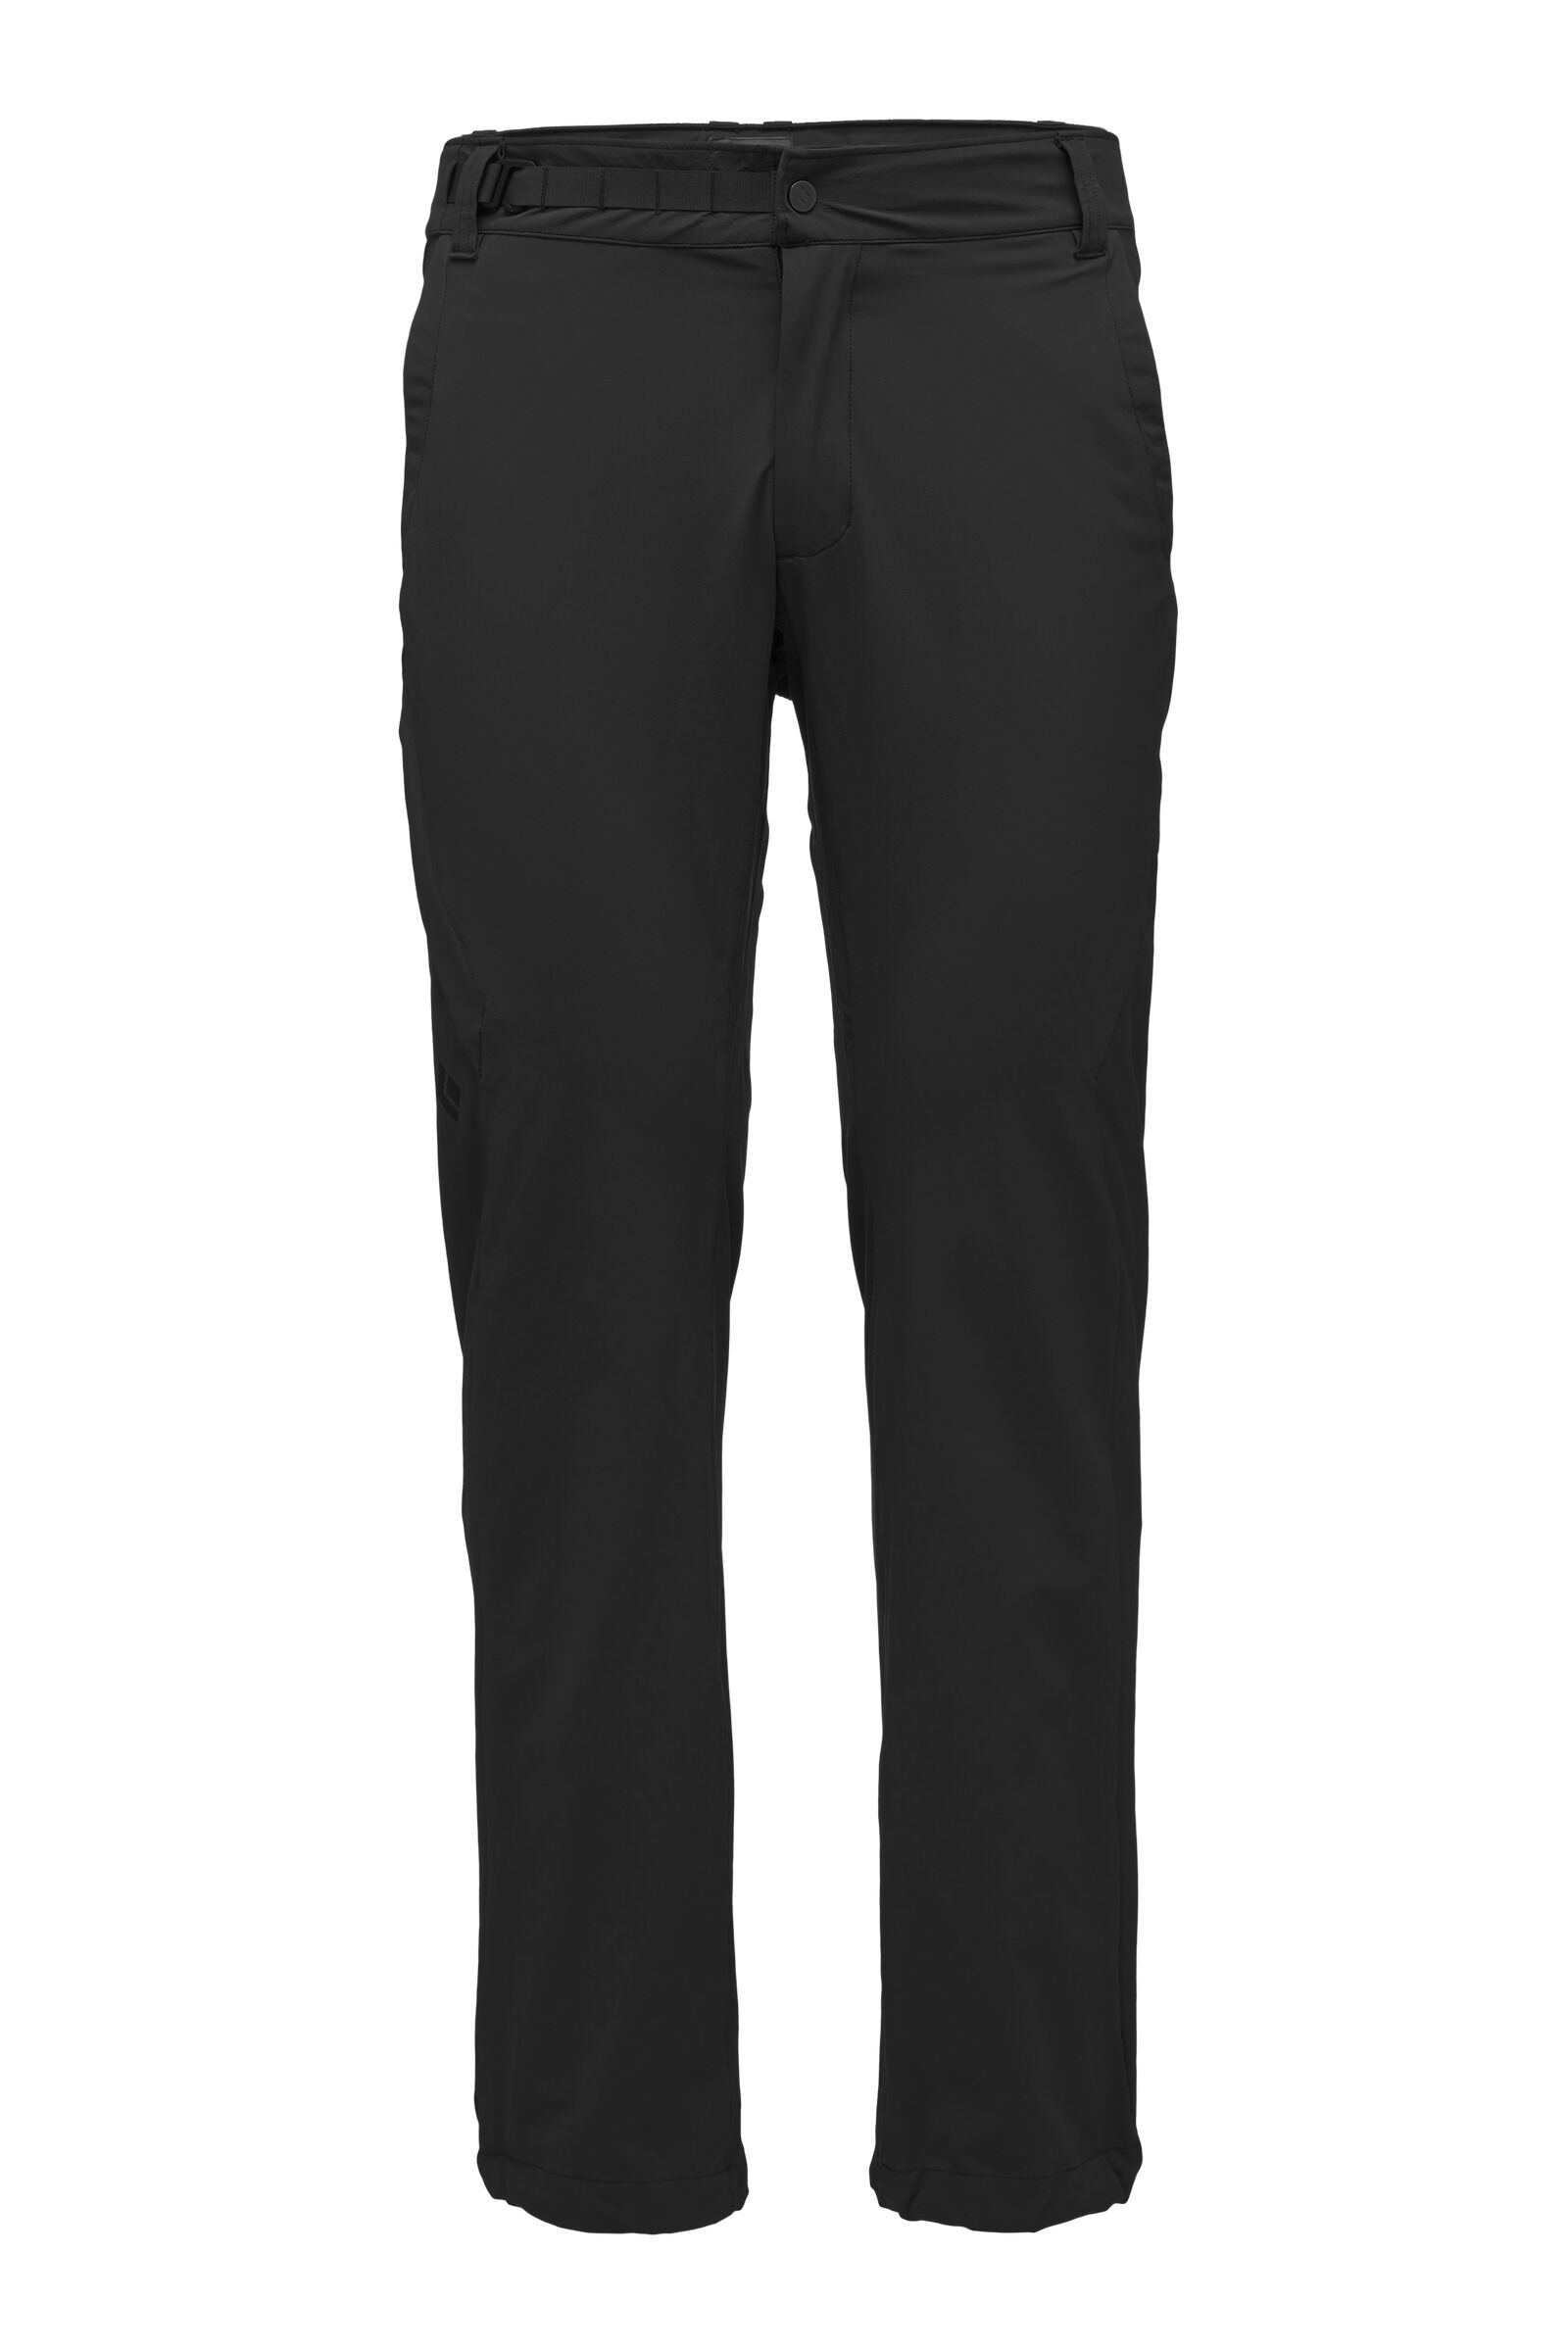 Black Diamond - Alpine Light Pants - Walking trousers - Men's